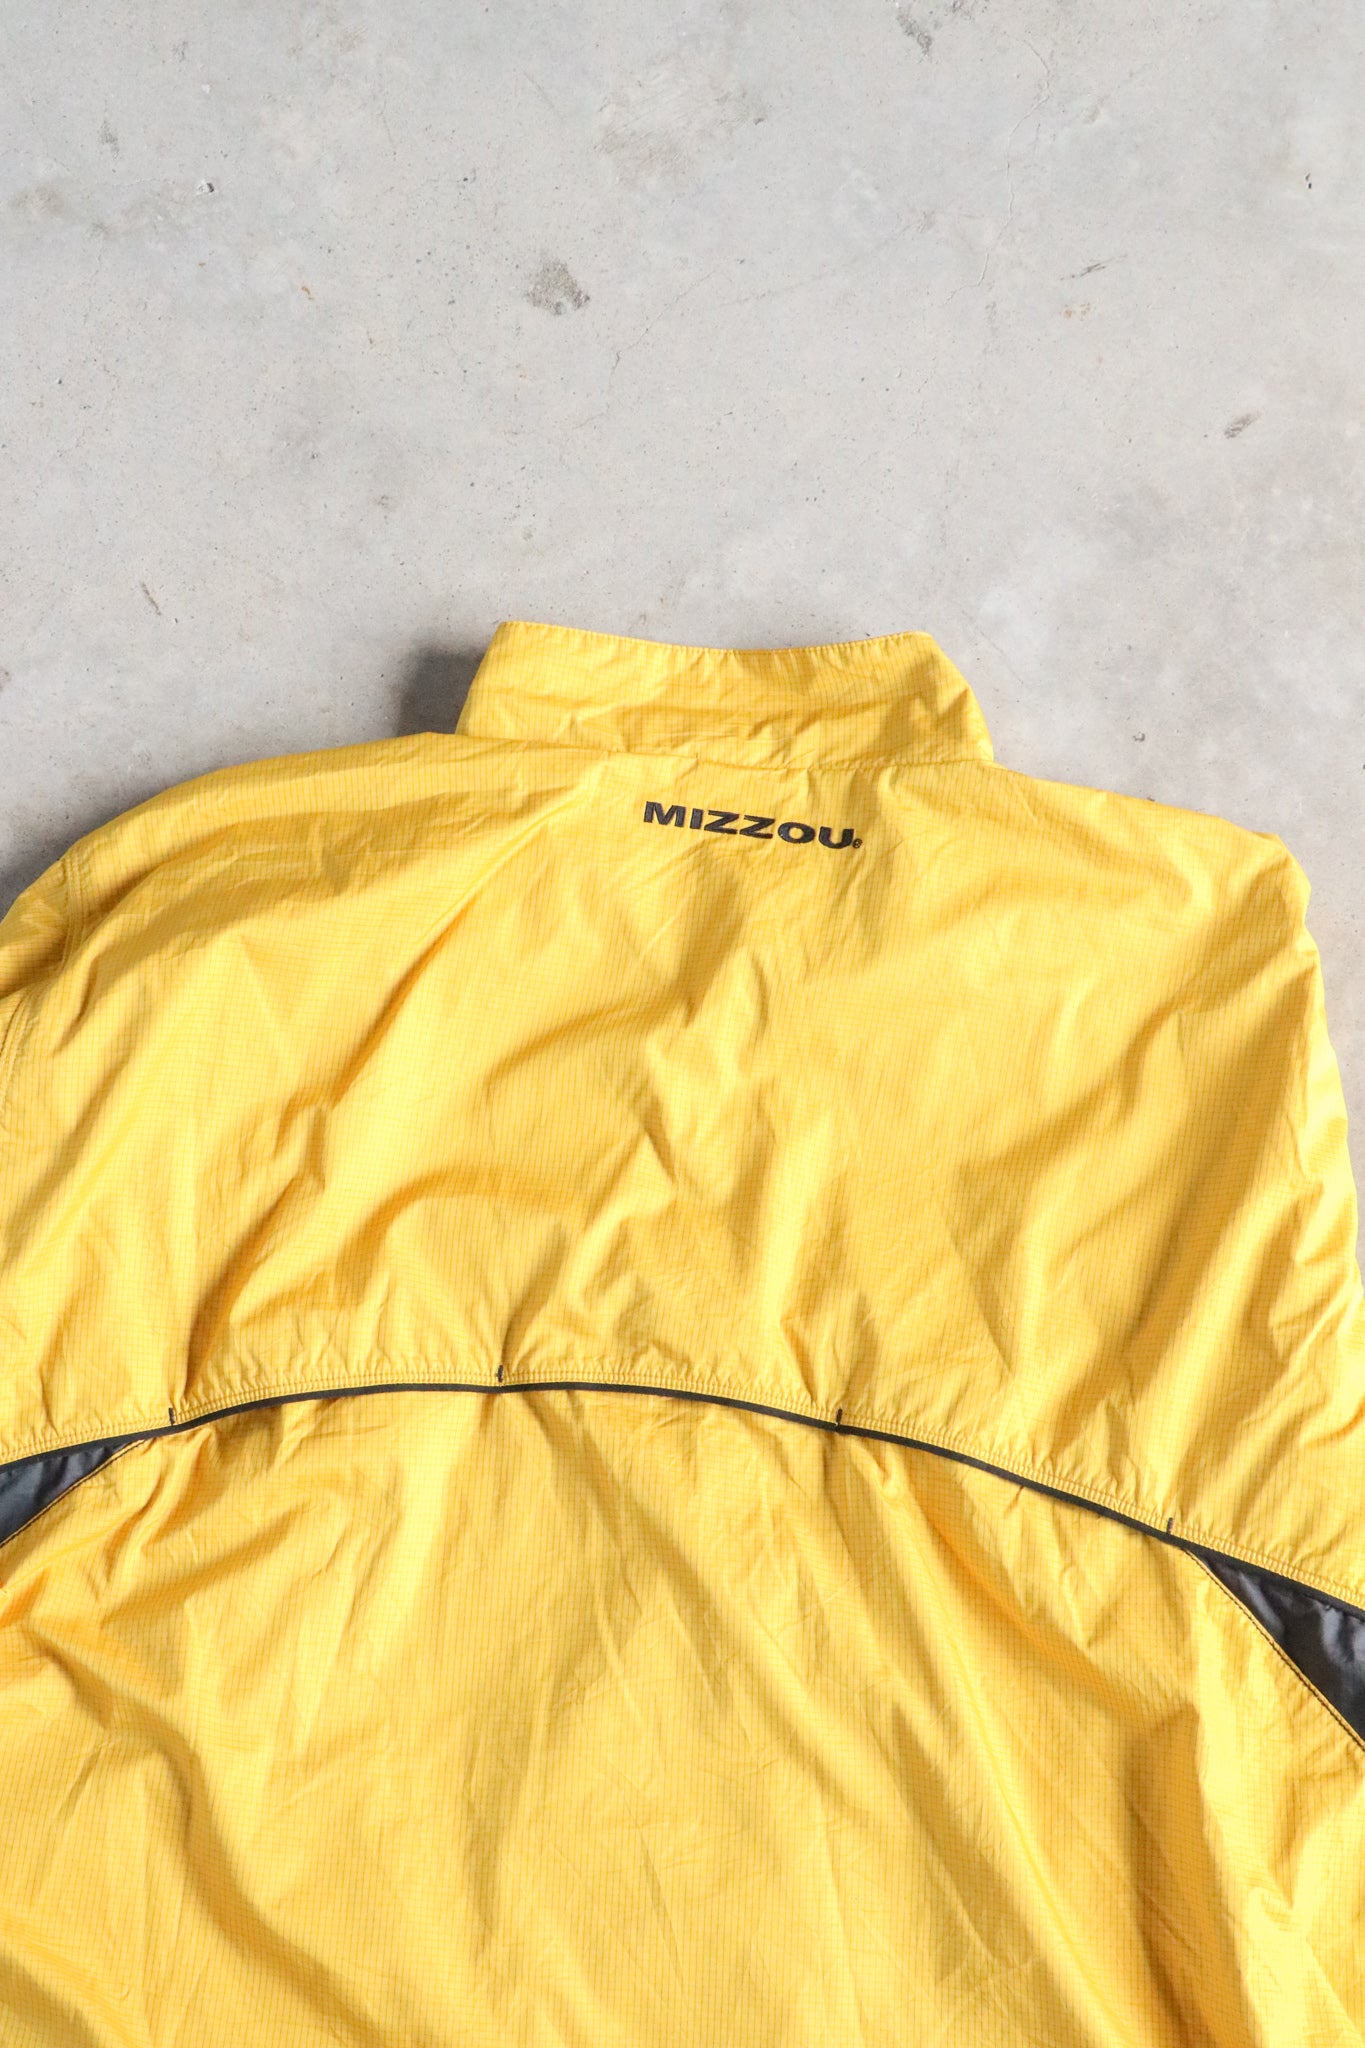 Vintage Nike Mizzou 1/4 Zip Pullover Jacket XL